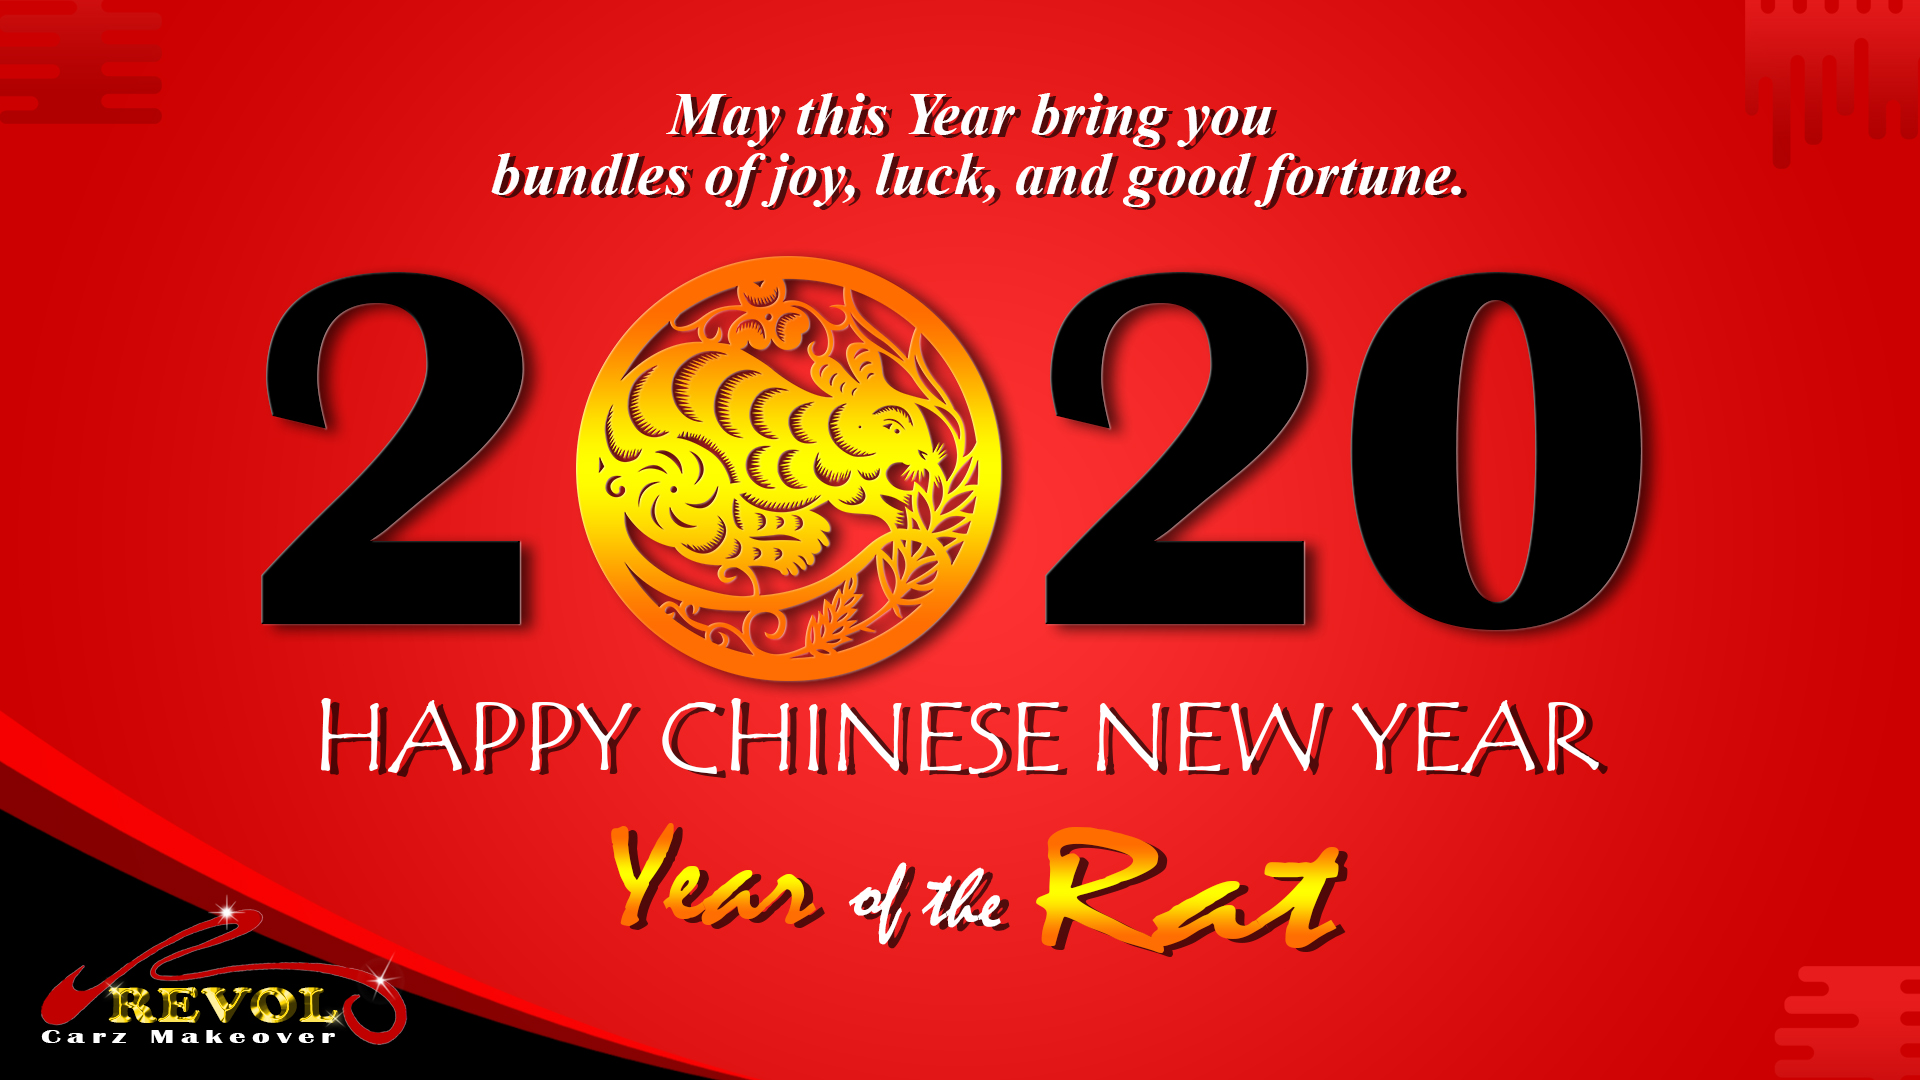 chinese new year 2020_04 - Copy.jpg